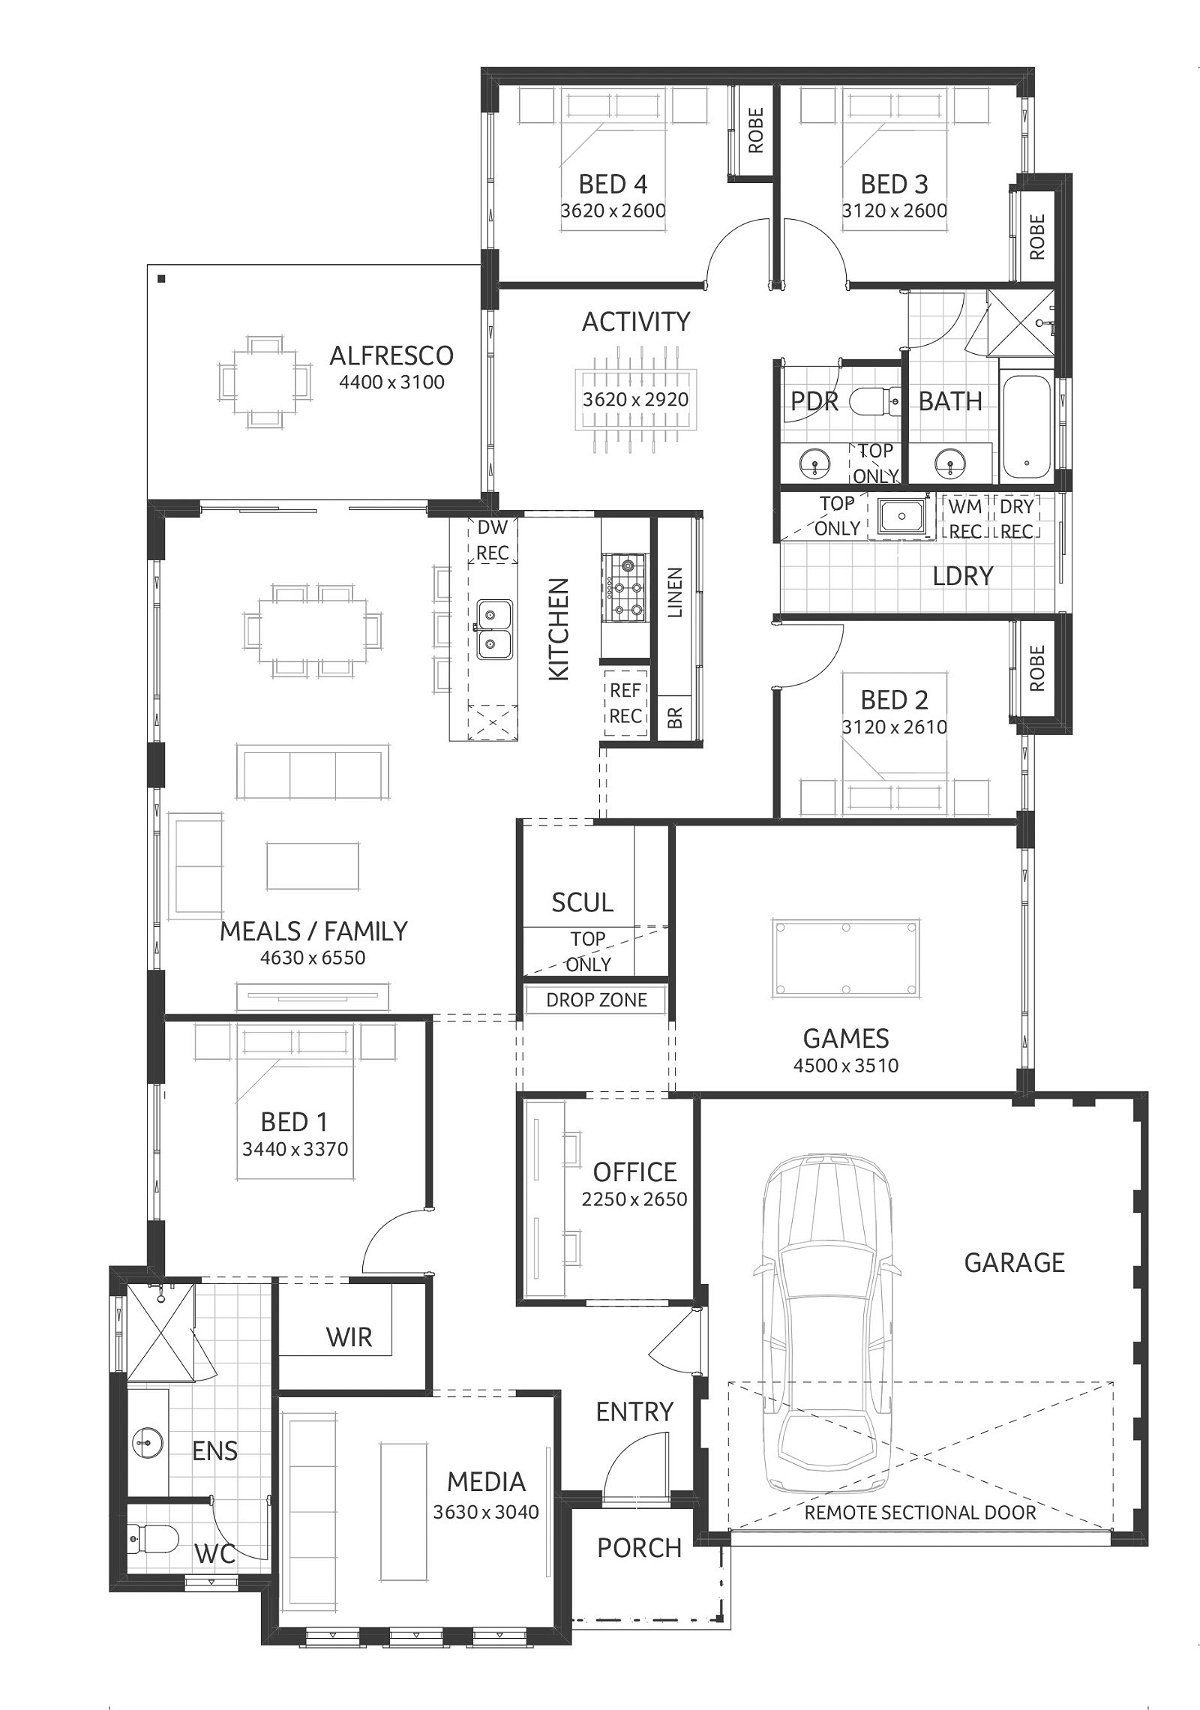 Plunkett Homes - Cassia | Lifestyle - Floorplan - Cassia Marketing Plan